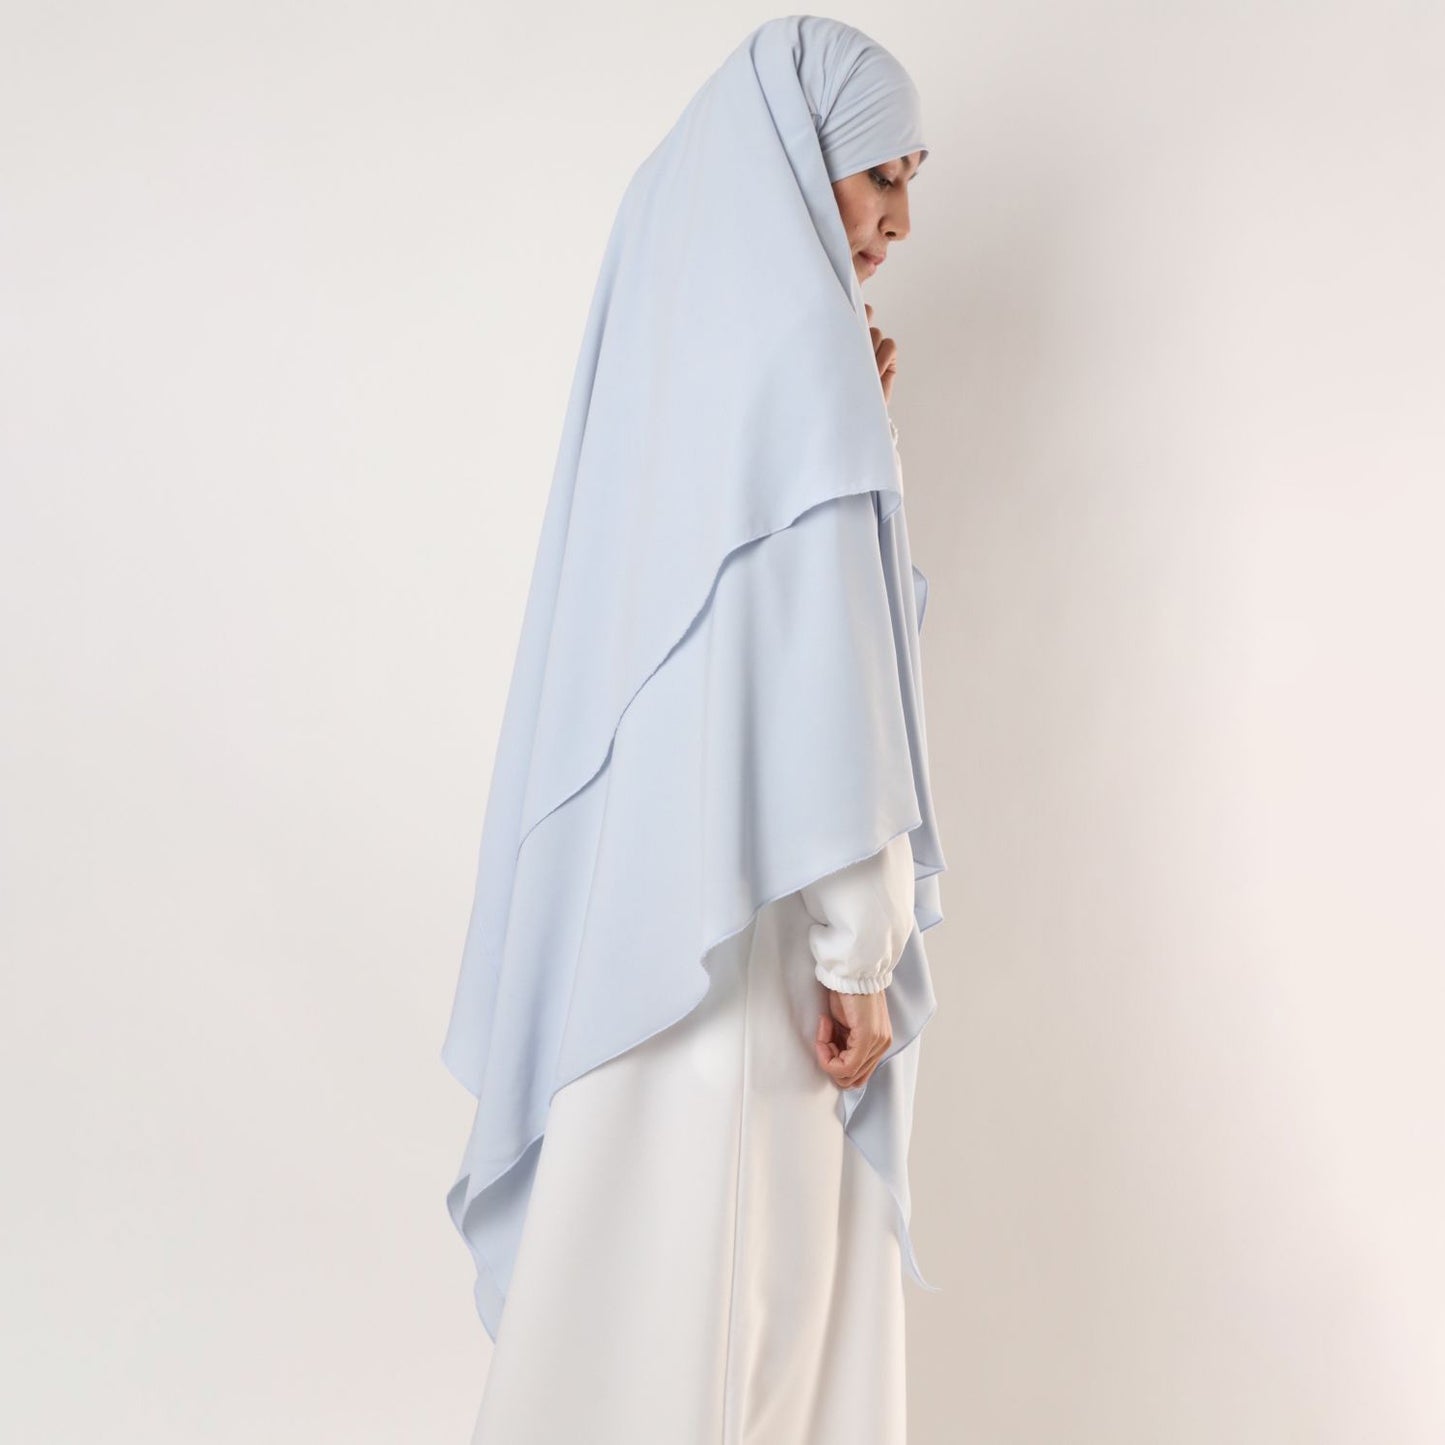 Khimar : 2 Layer Triangular Diamond Instant Khimar-Hijab-Jilbab for Girls & Women in Light Green Color | Tie Back Burkha Jilbab Khimar Style Abaya Hijab Niqab Islamic Wear